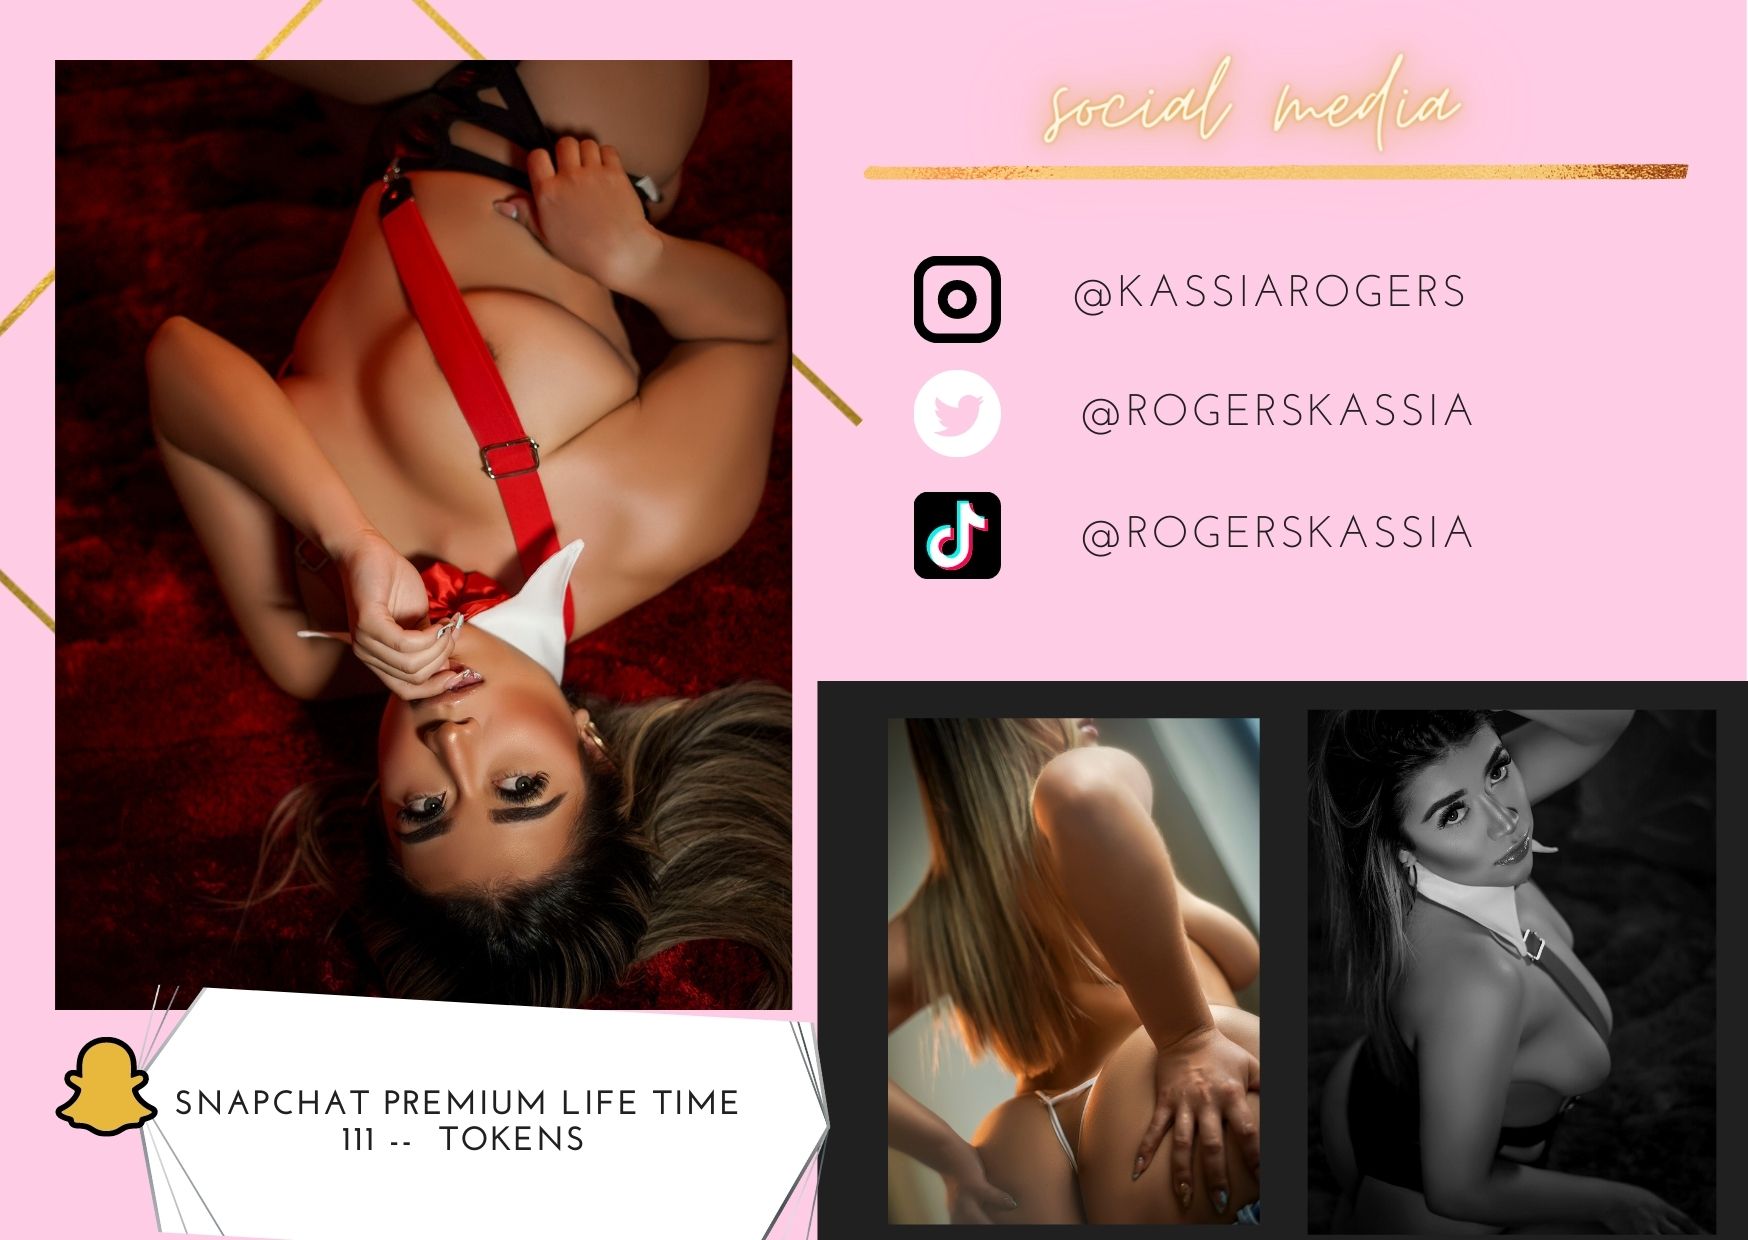 Kassia-Rogers social media image: 1